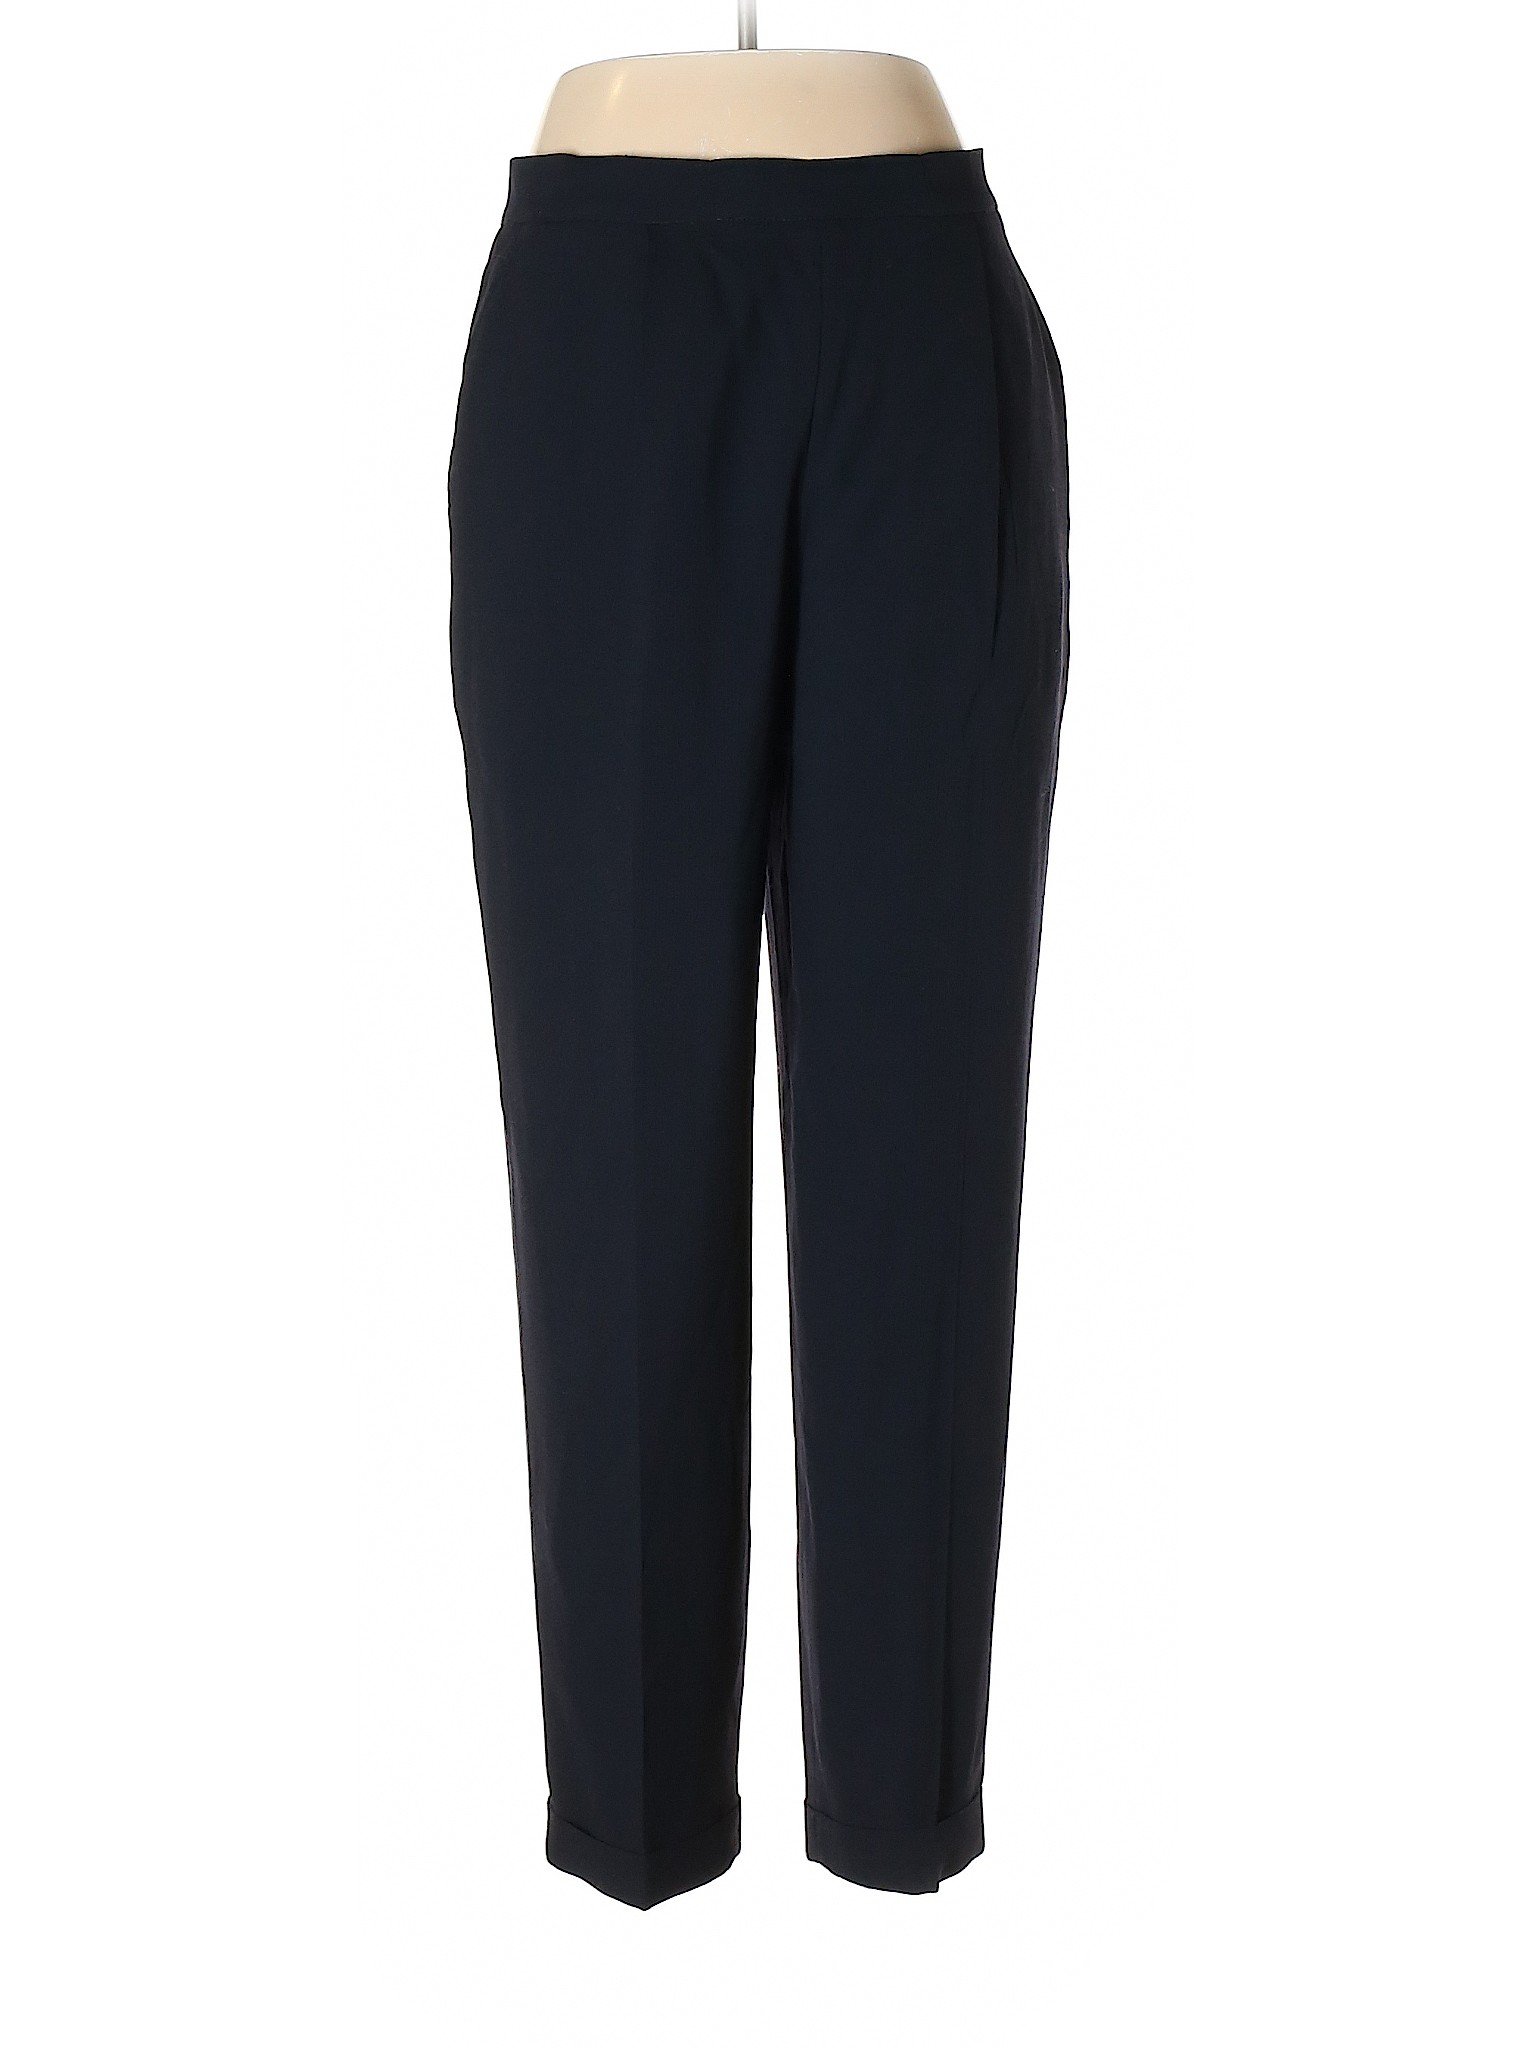 Barneys New York Women Black Wool Pants 8 | eBay